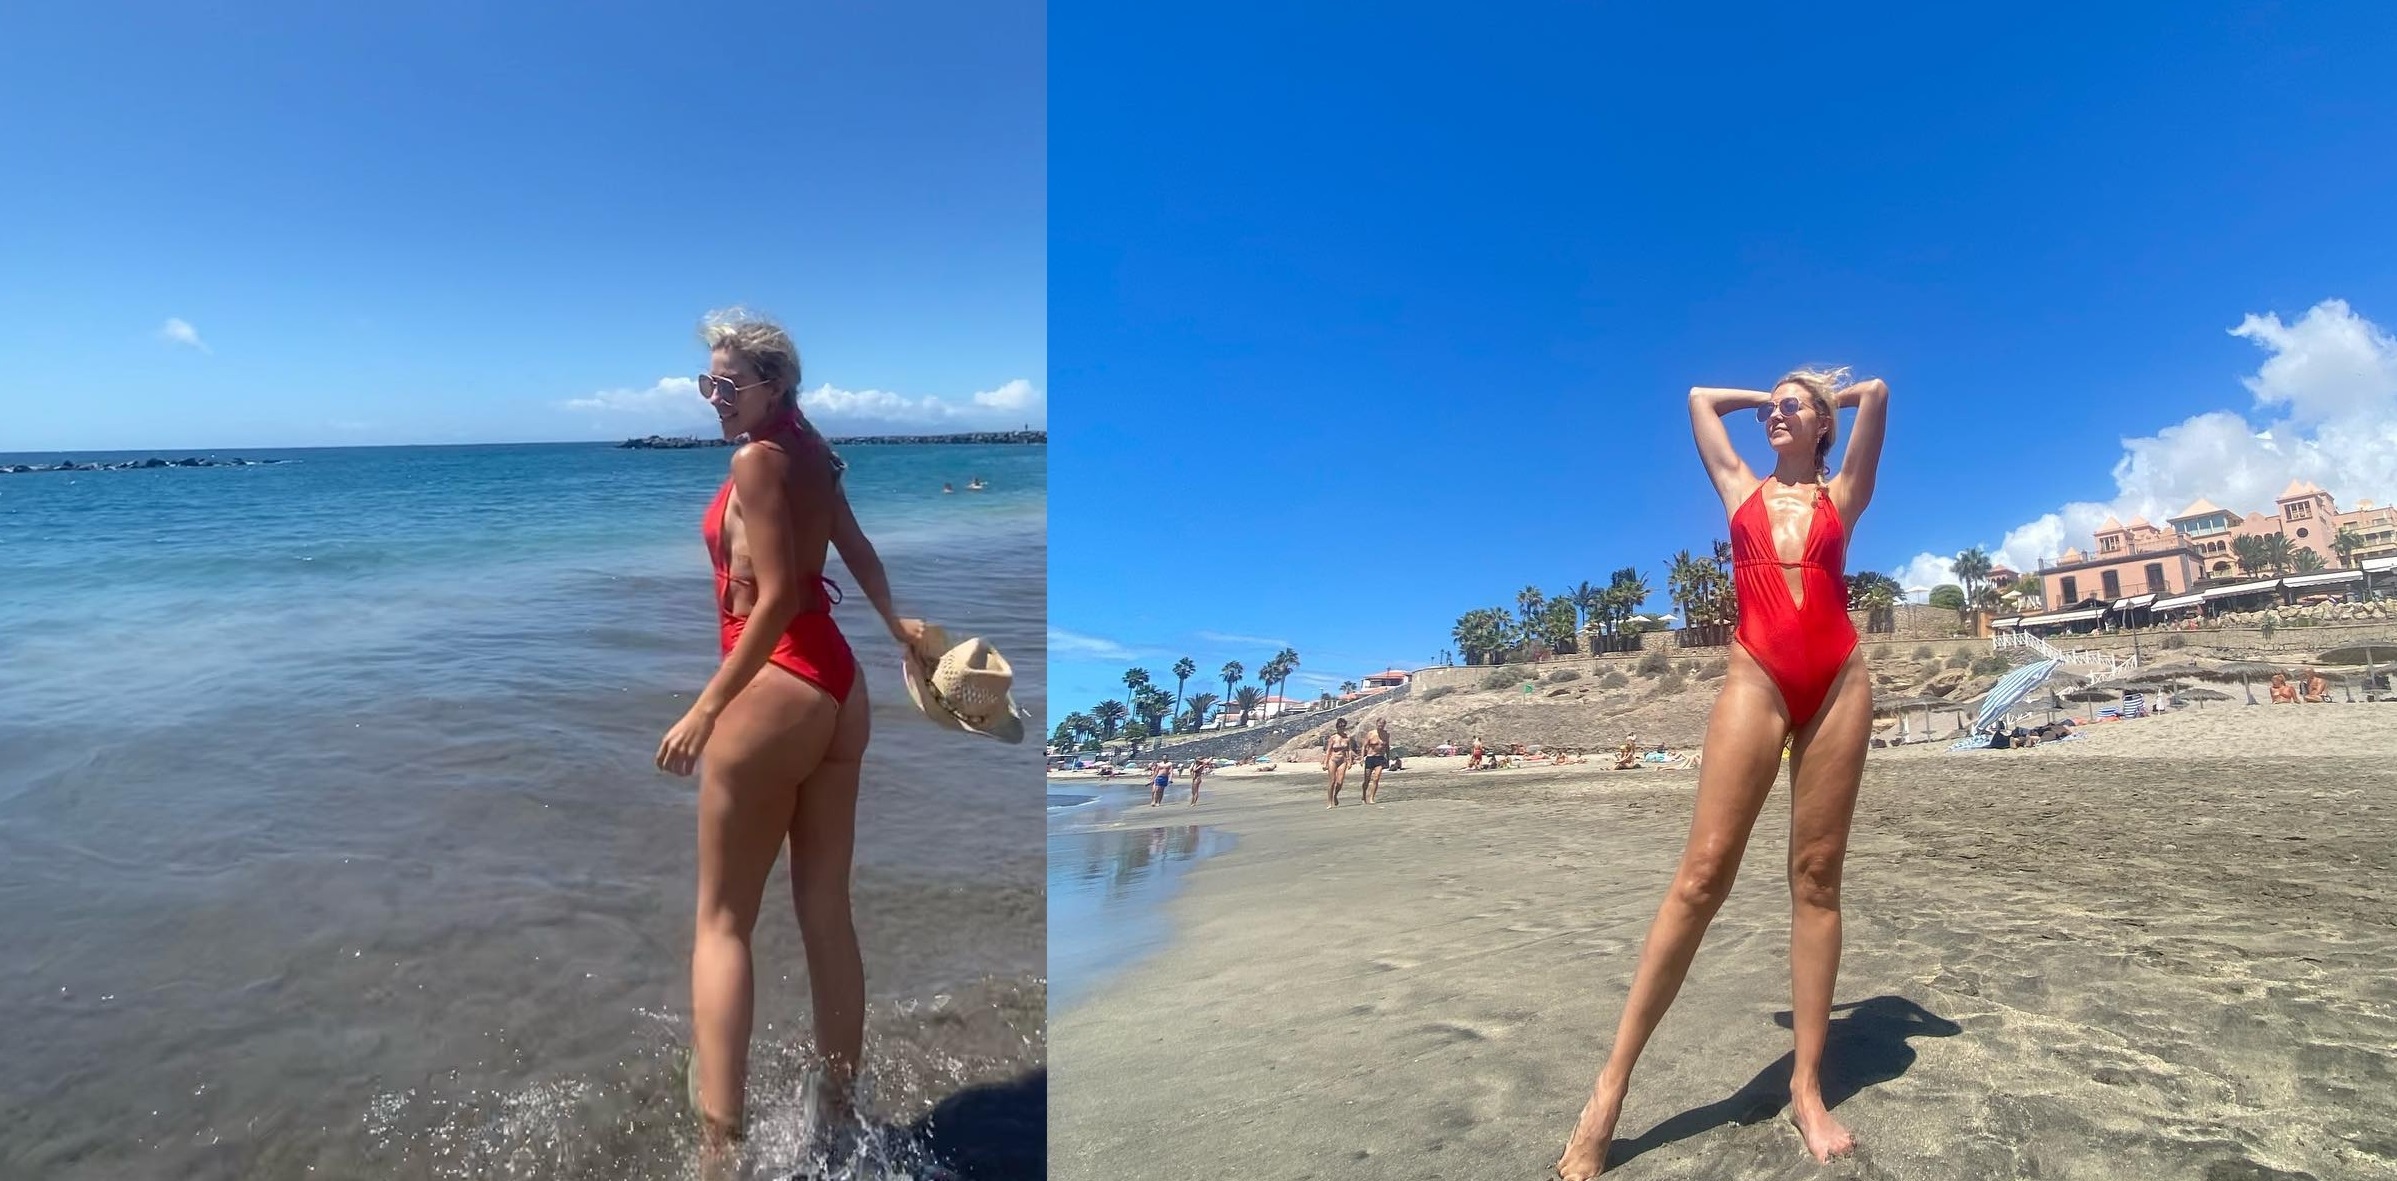 Fernanda Castillo looks on the beach with an elegant red swimsuit